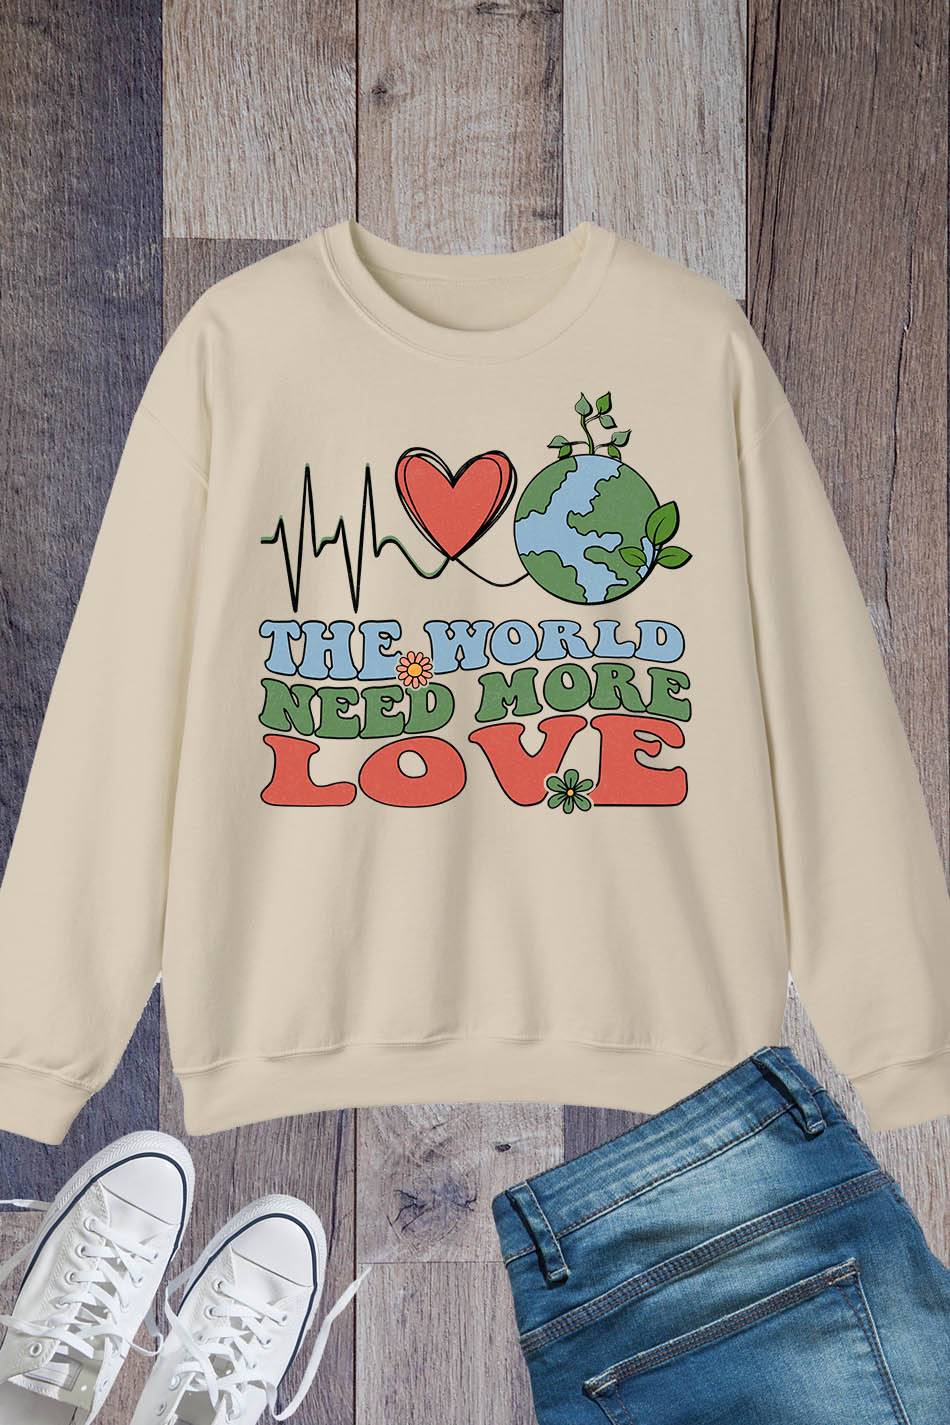 The World Need More Love Earth Day Sweatshirts